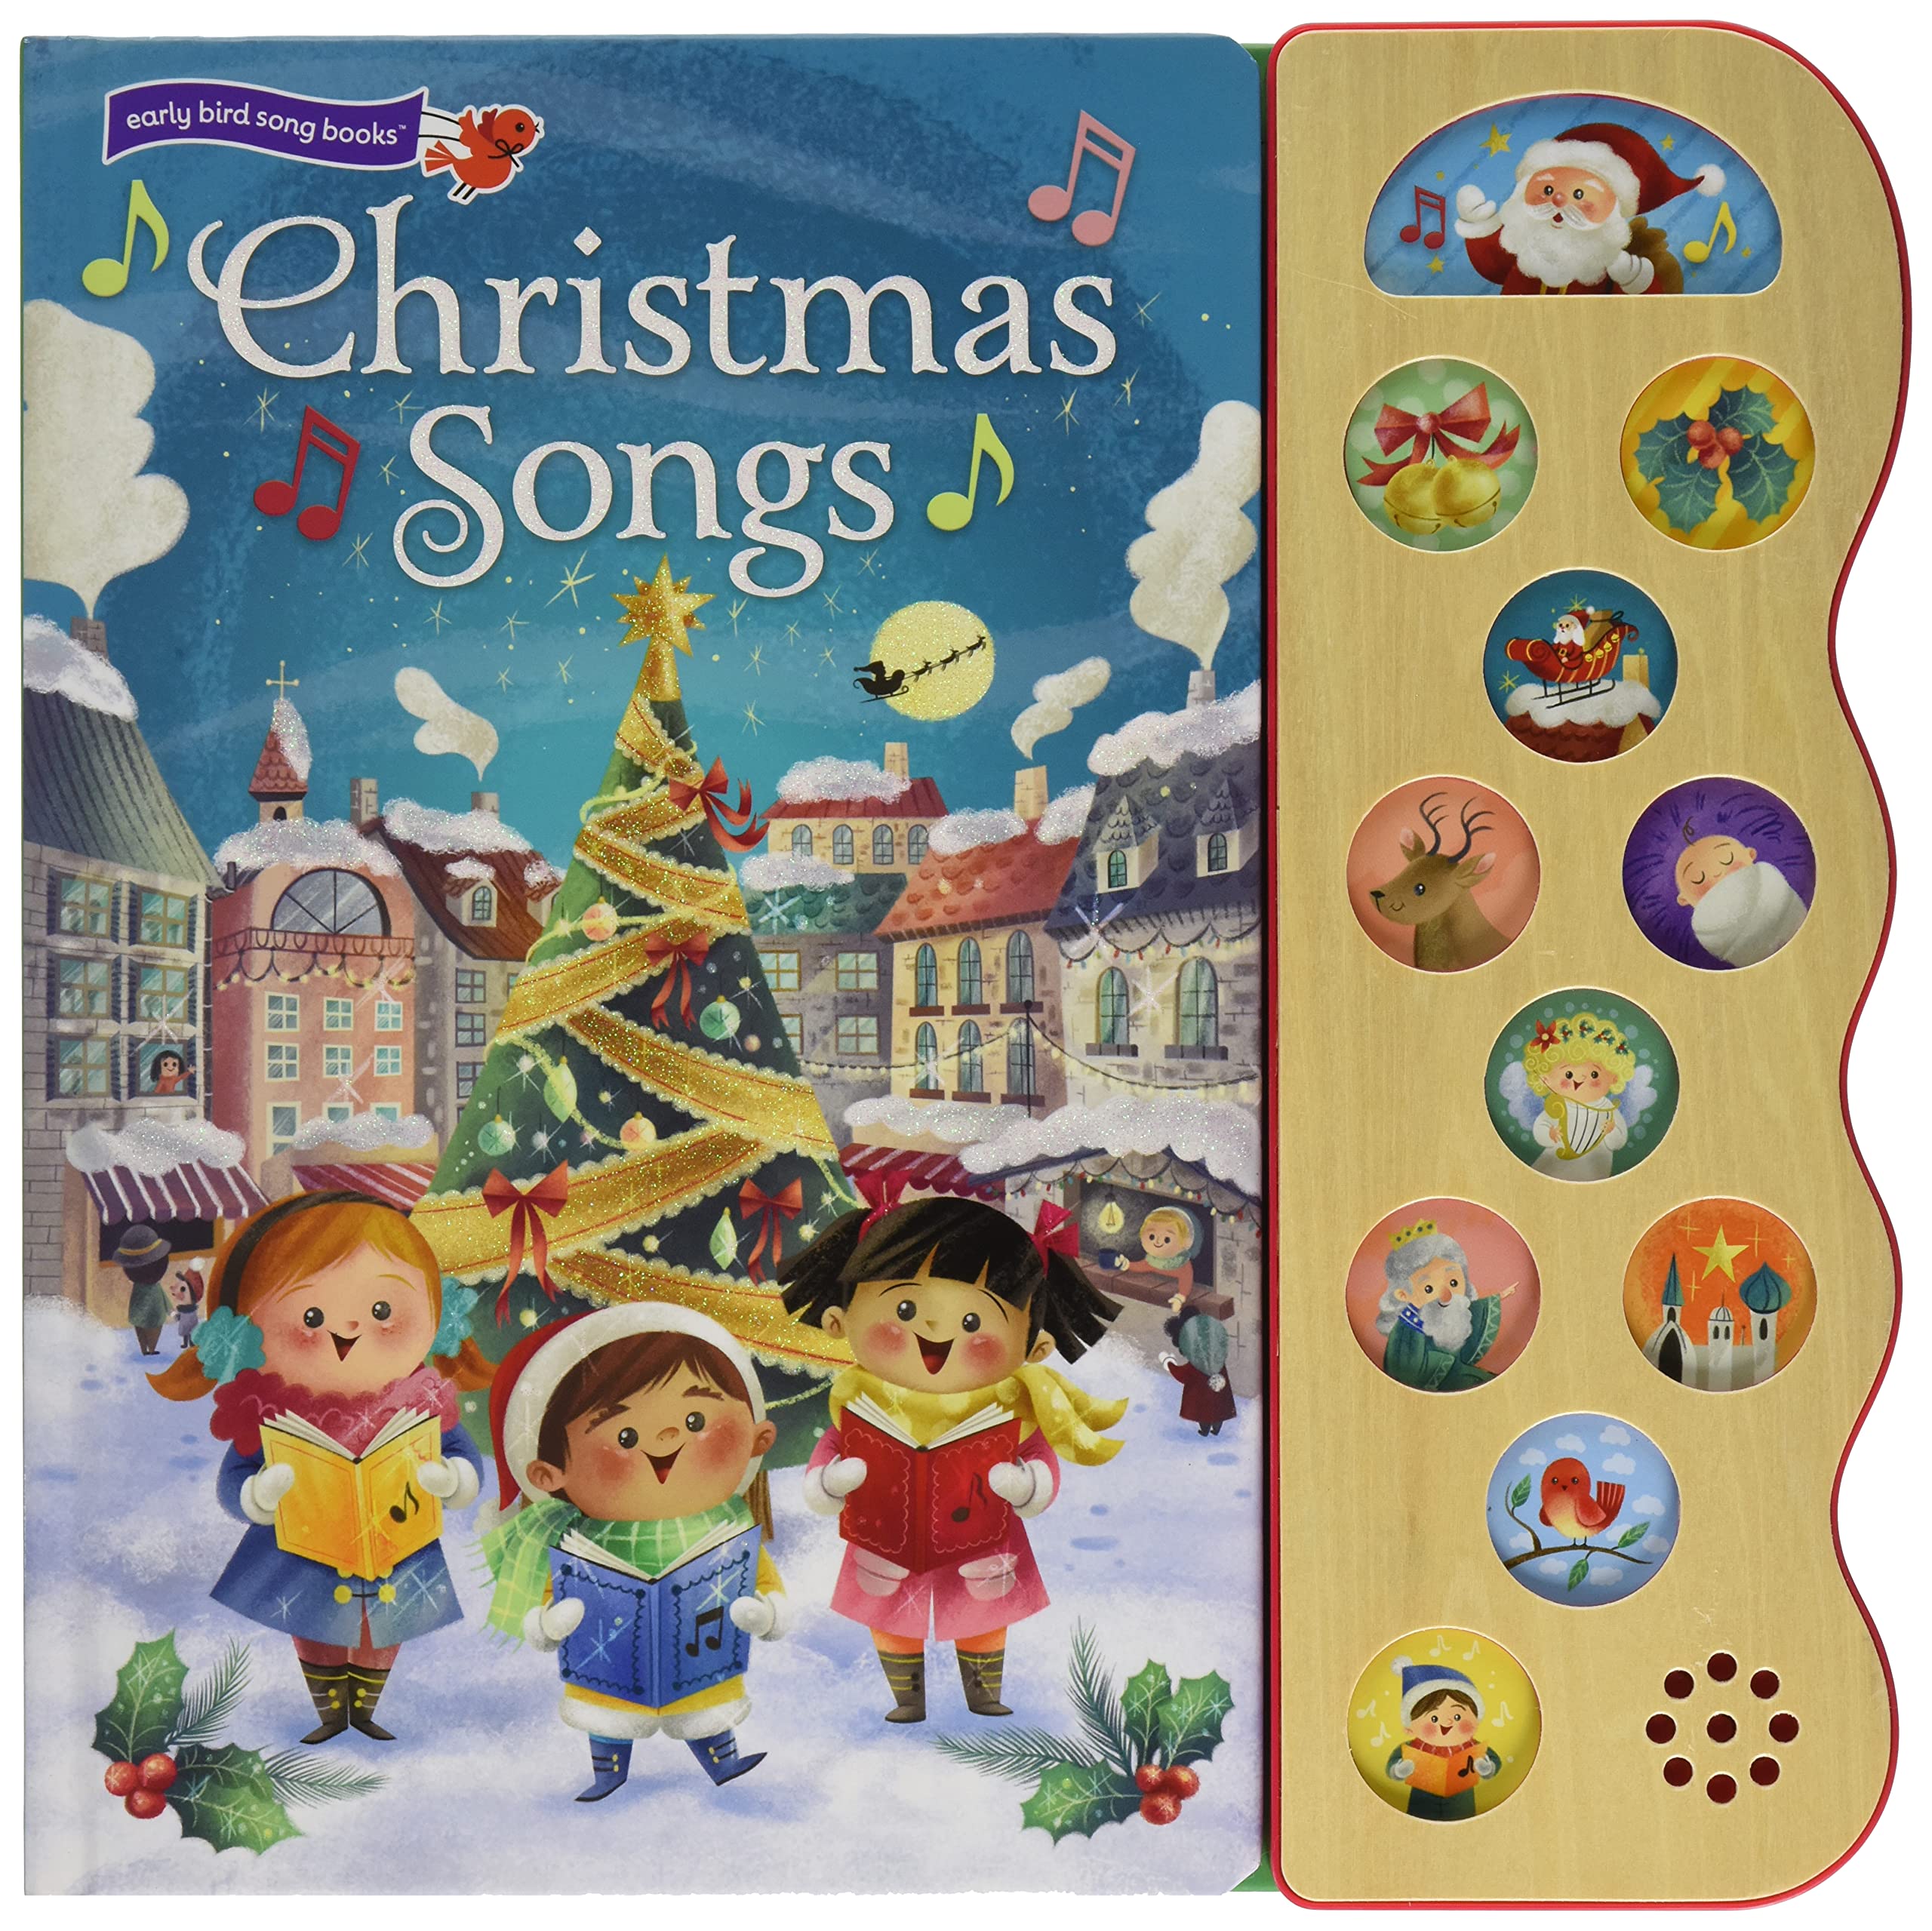 Favorite Christmas Songs with Lyrics, Christmas Gift,: Christmas Song  Lyrics for kids, Christmas Song book for Children, Christmas song book to  sing